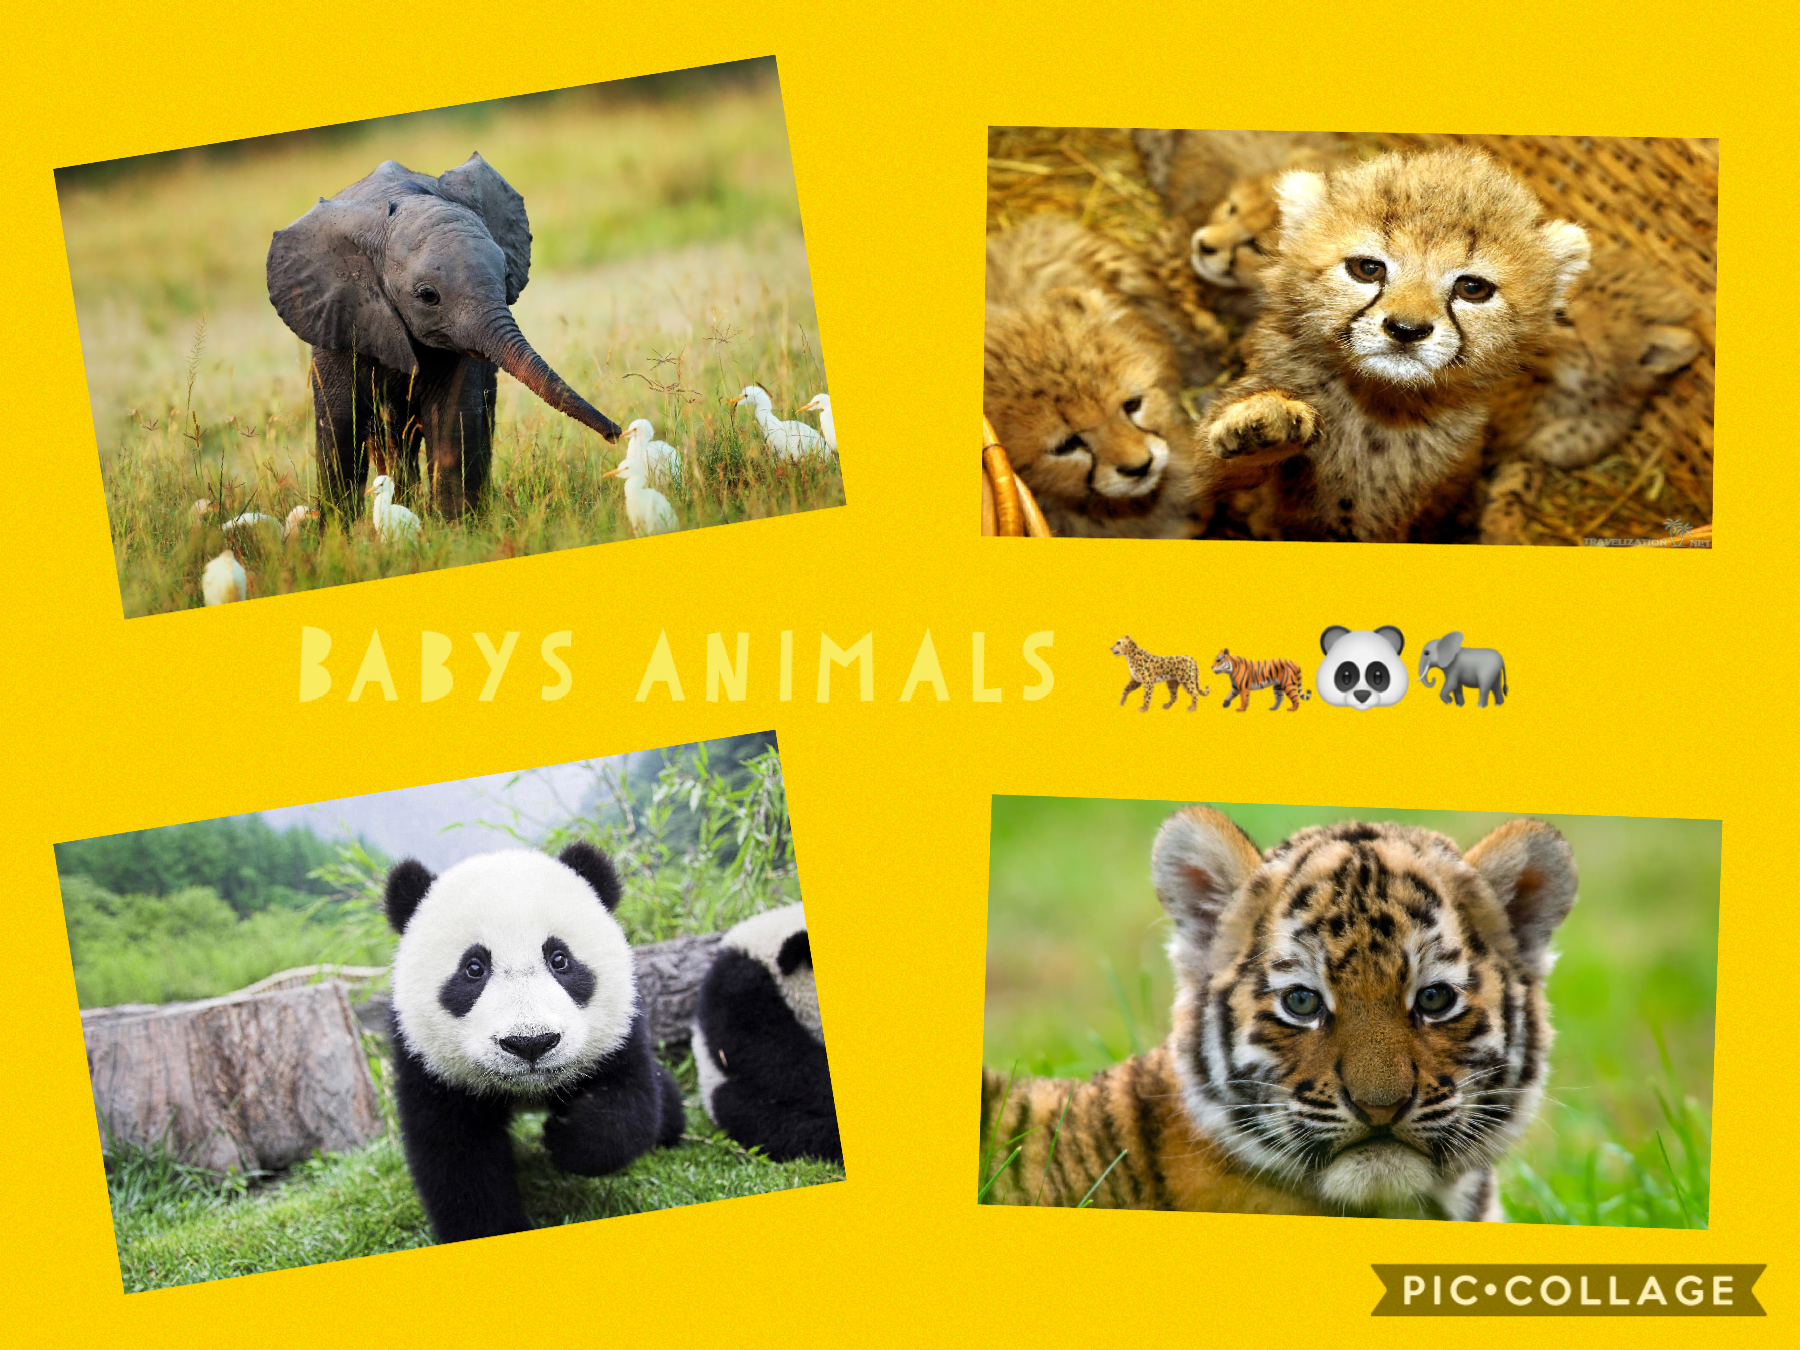 The babys animals 